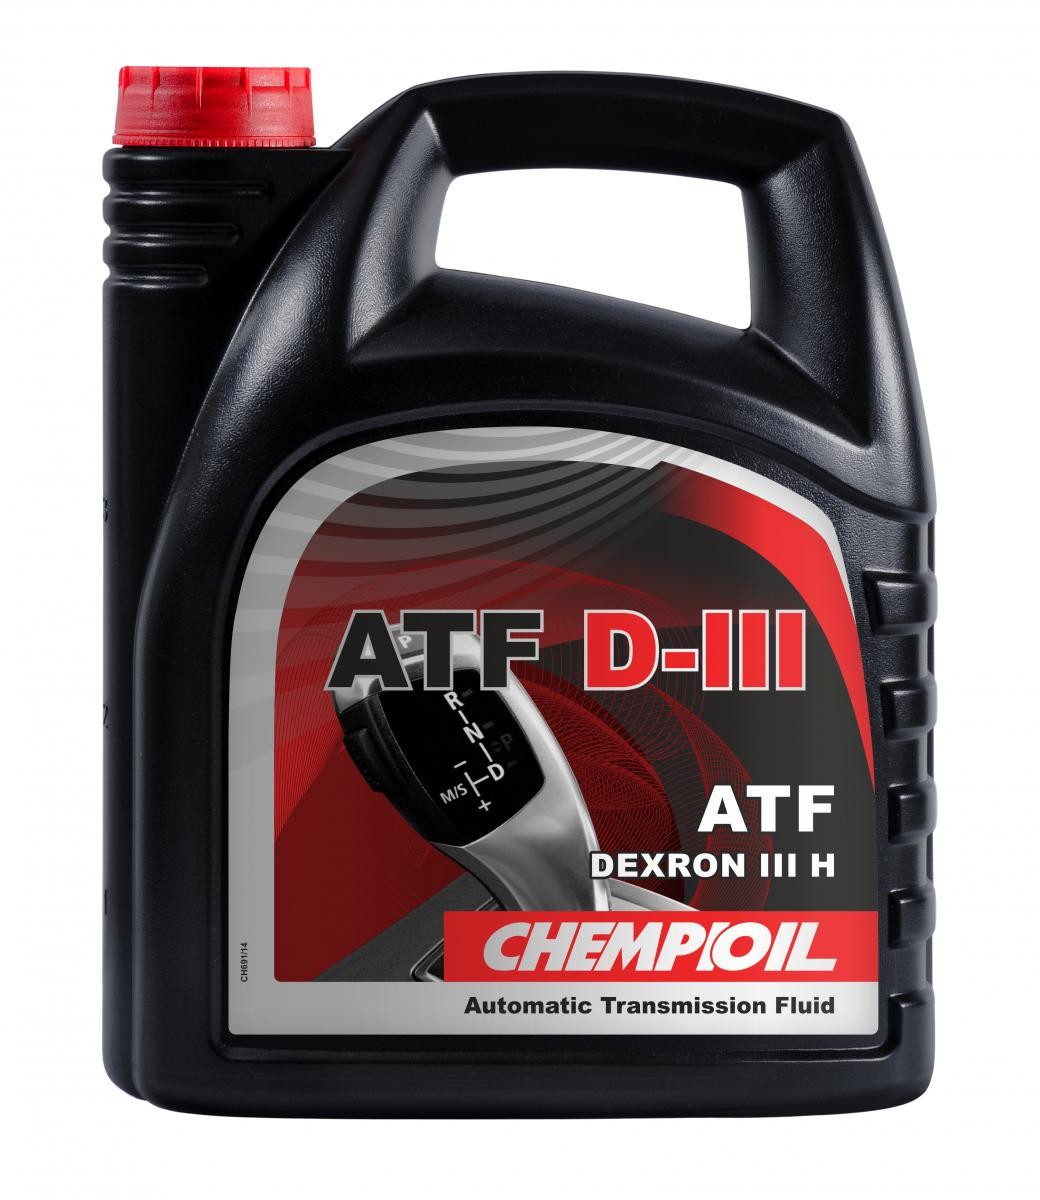 CHEMPIOIL ATF D-III CH8902-4 Automatic transmission fluid M2C922-A1